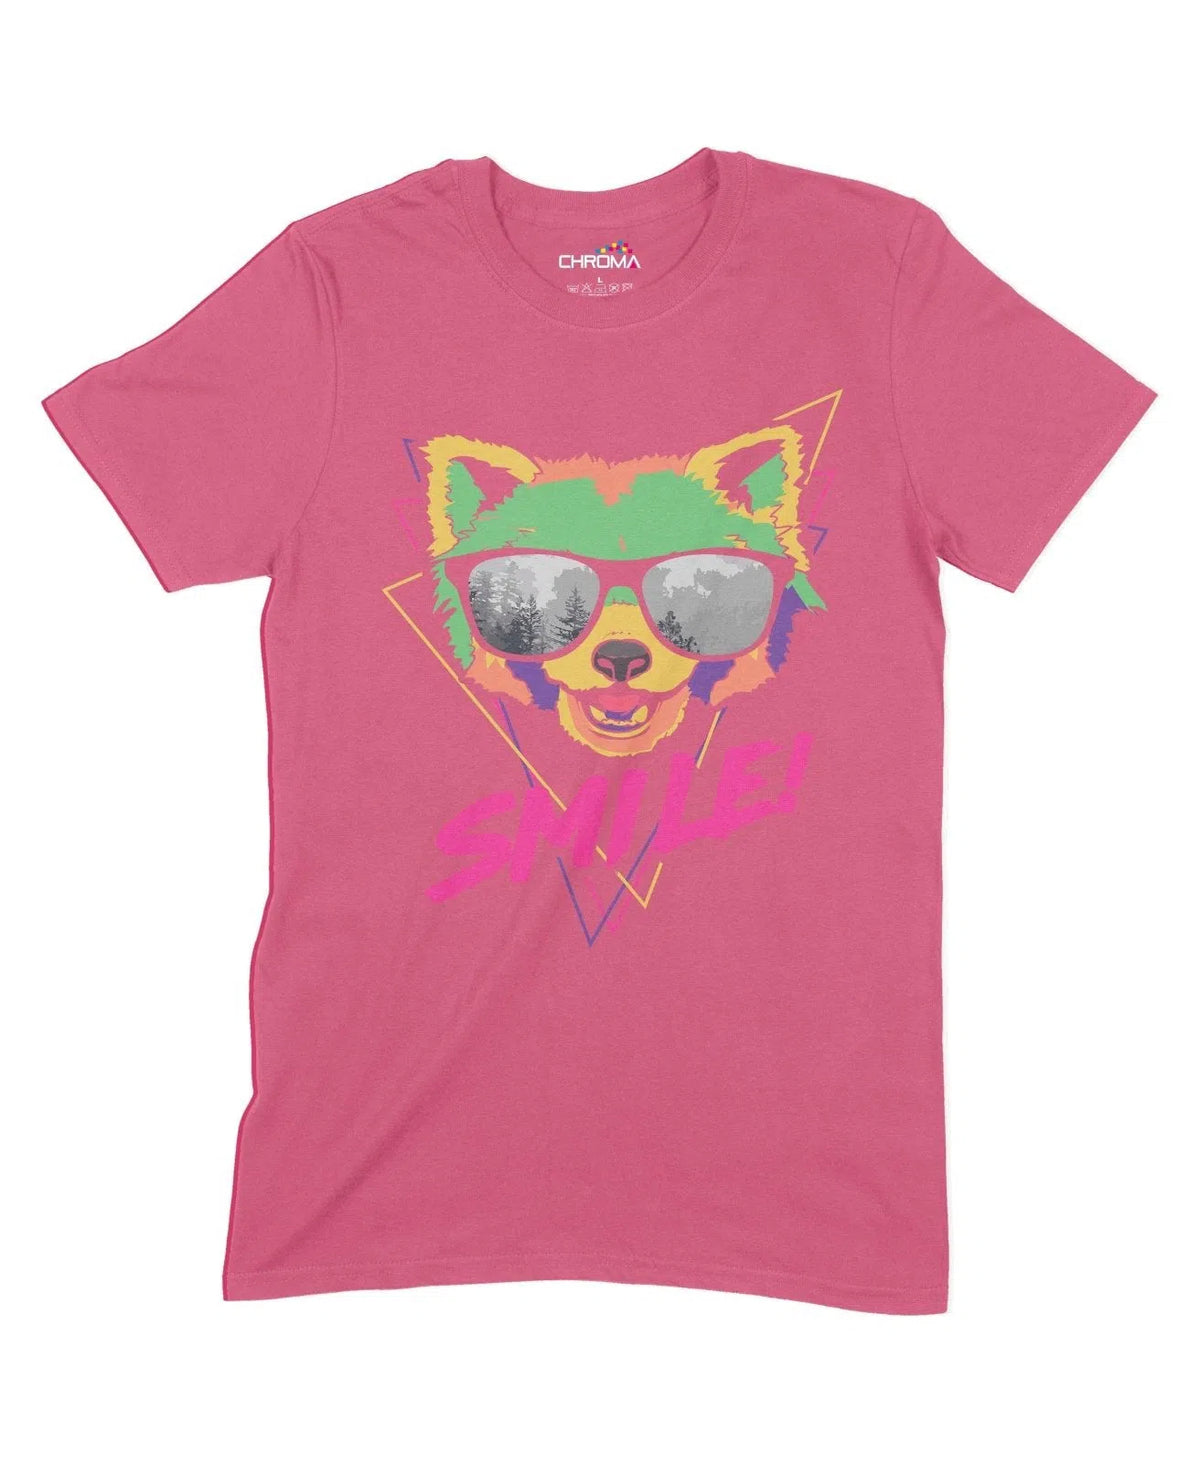 Smile! Cool Fox Retro Unisex Adult T-Shirt | Premium Quality Streetwea Chroma Clothing